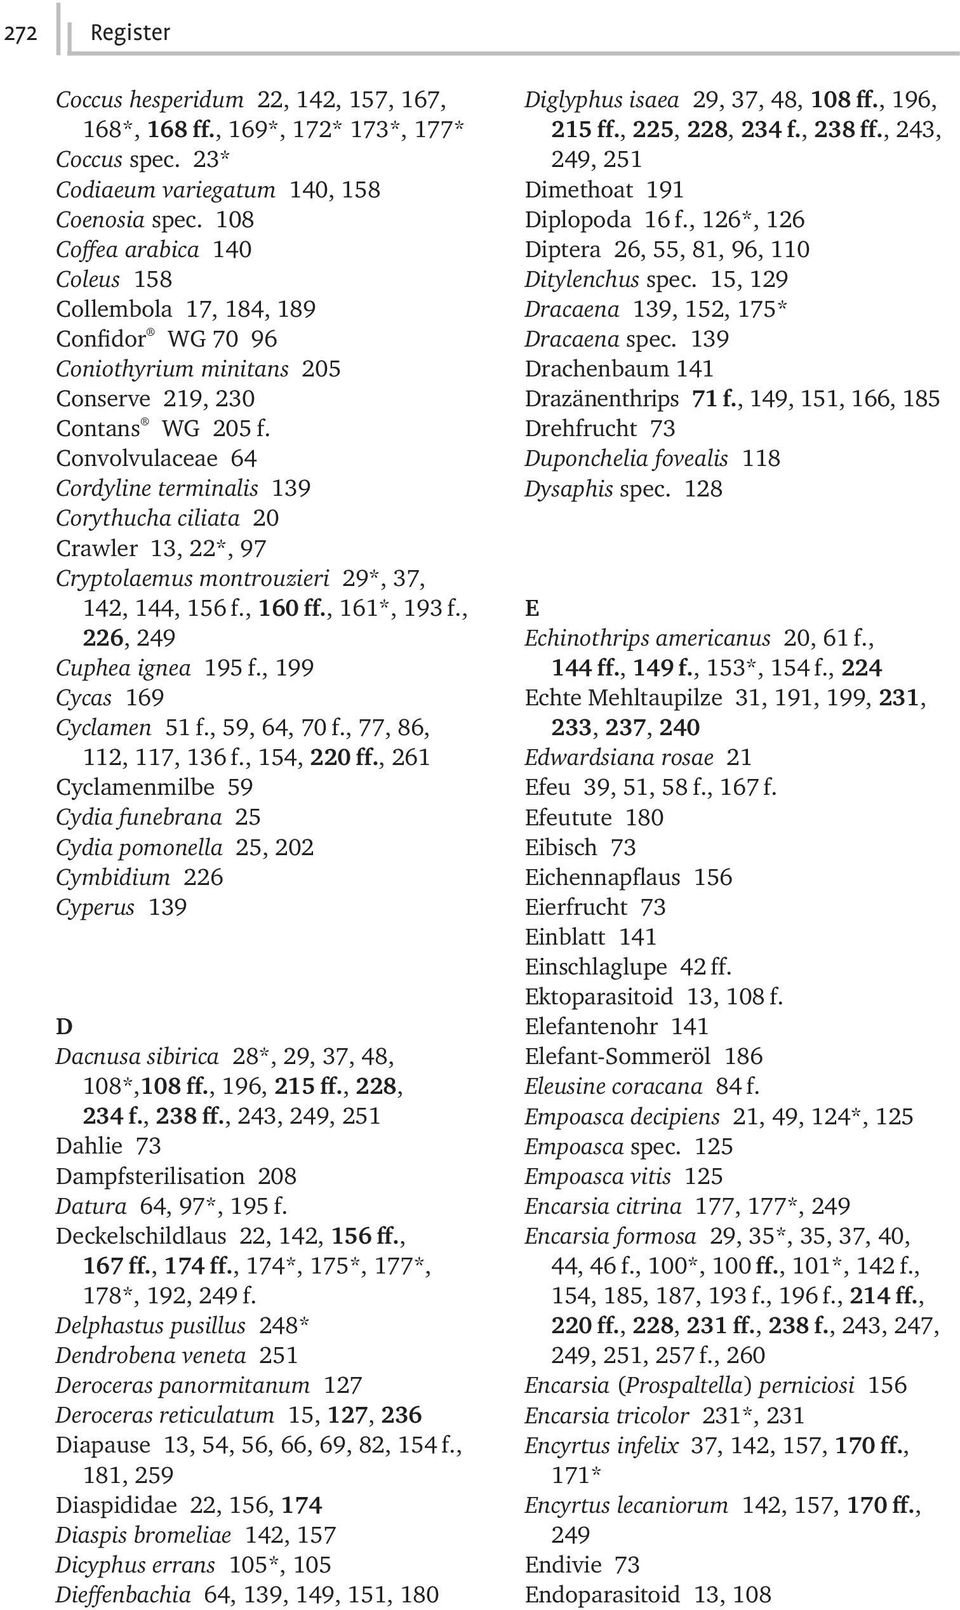 Convolvulaceae 64 Cordyline terminalis 139 Corythucha ciliata 20 Crawler 13, 22*, 97 Cryptolaemus montrouzieri 29*, 37, 142, 144, 156 f., 160 ff., 161*, 193 f., 226, 249 Cuphea ignea 195 f.